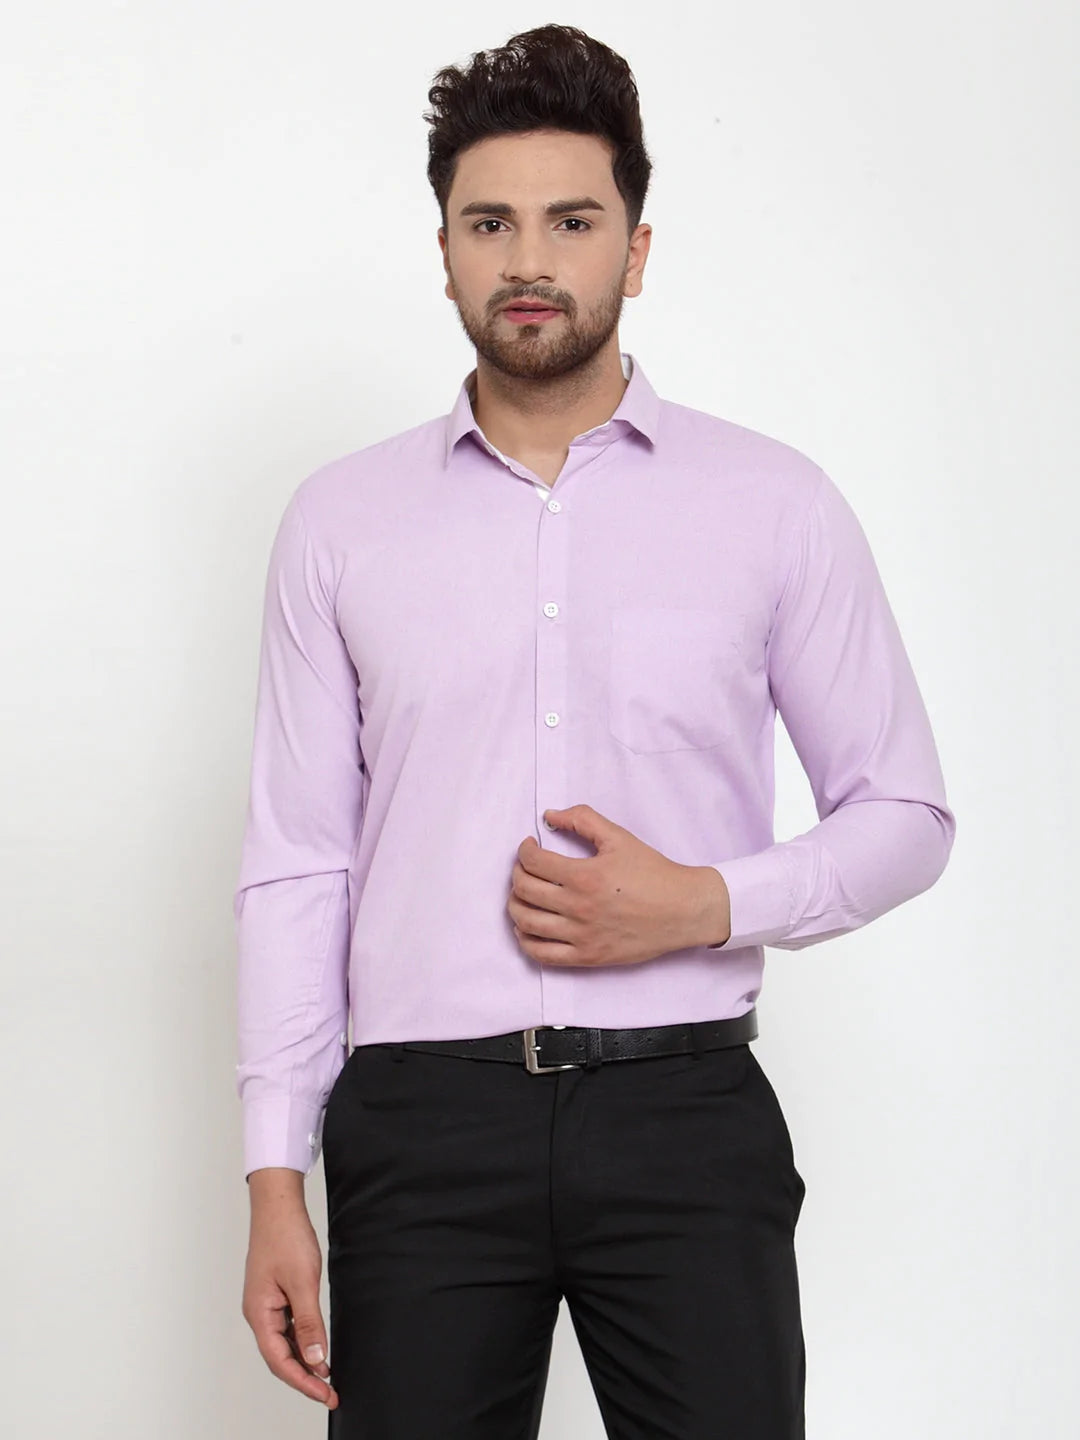 Jainish Light-Purple Formal Shirt with white detailing ( SF 419Light-Purple )